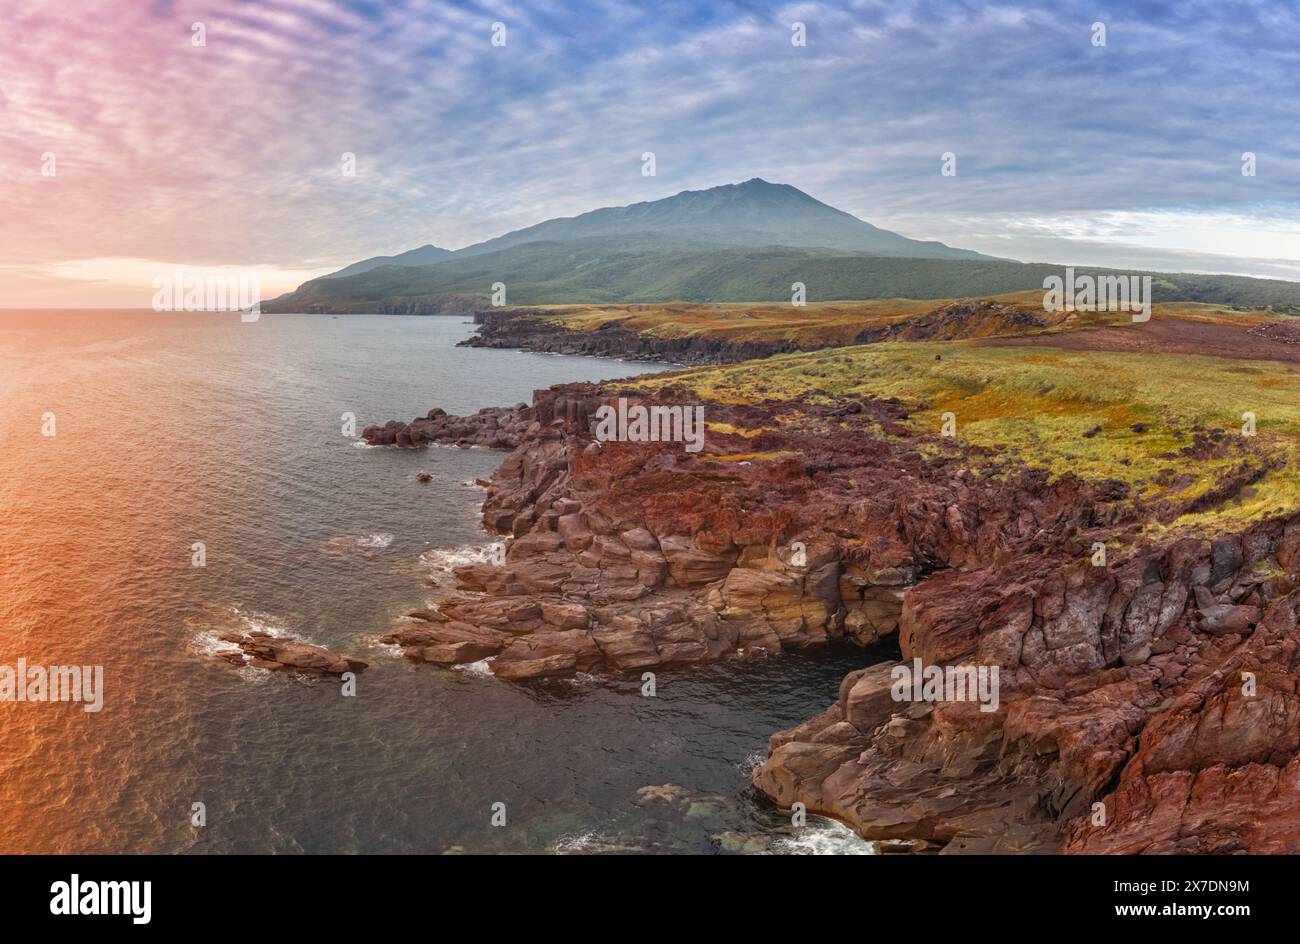 Aerial view The Yankito lava plateau on the Pacific coast of Kuril Islands,Russia. Stock Photo